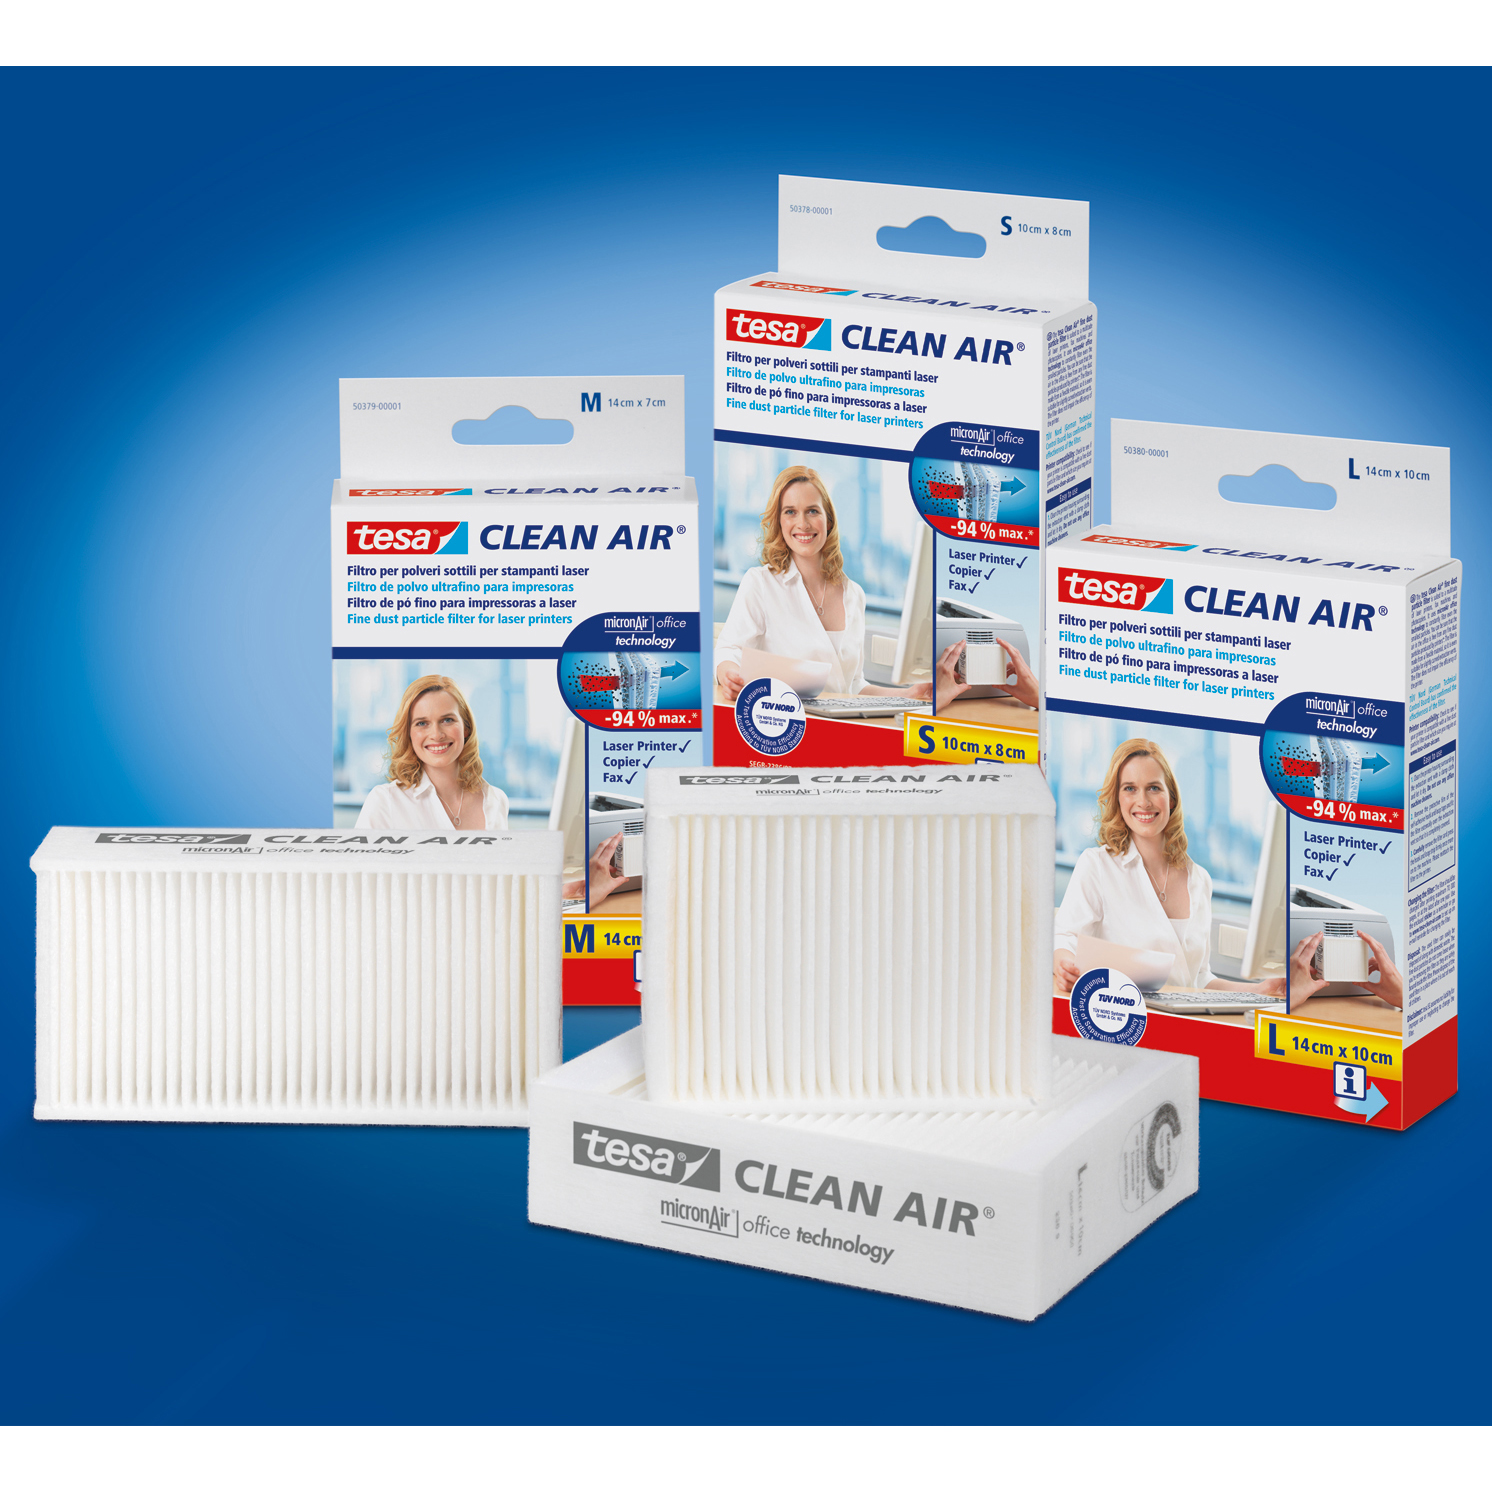 Filtro Clean Air S per Stampanti e Fax 10x8cm Tesa 50378 00000 01 4042448154705